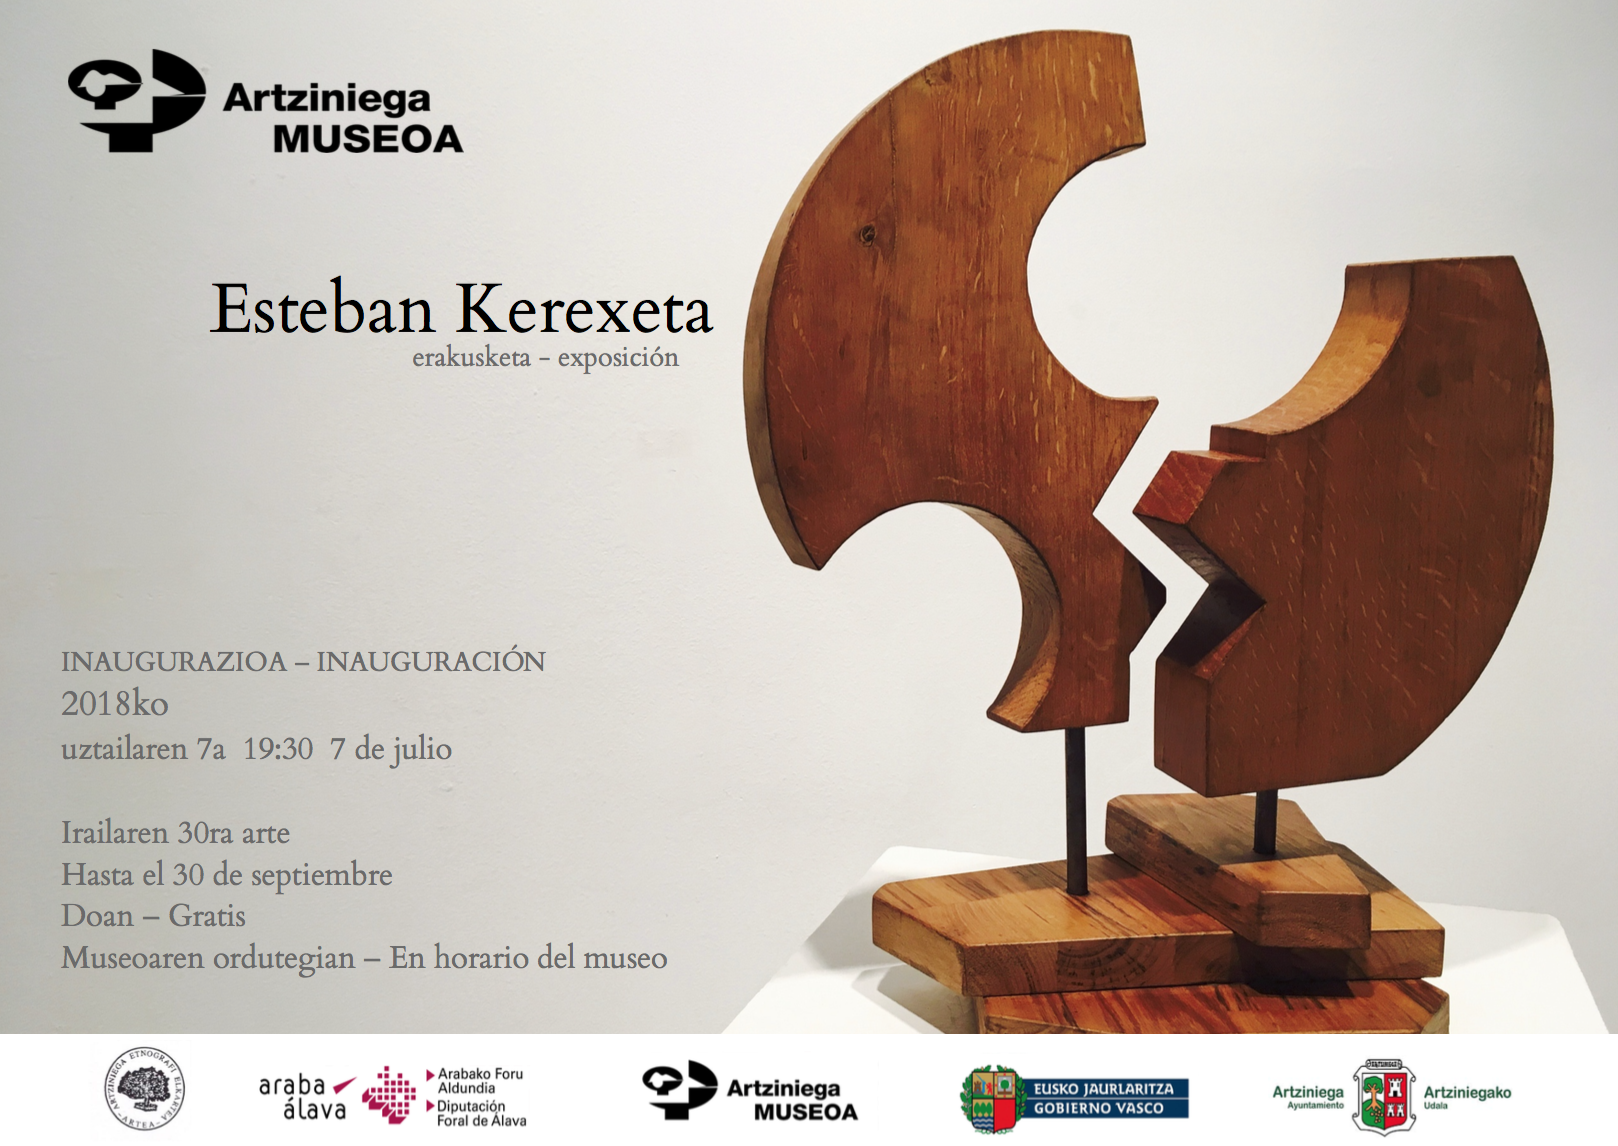 ESTEBAN KEREXETA-ESKULTURA ERAKUSKETA-EXPOSICIÓN DE ESCULTURA-irailaren 30 arte-hasta el 30 de septiembre